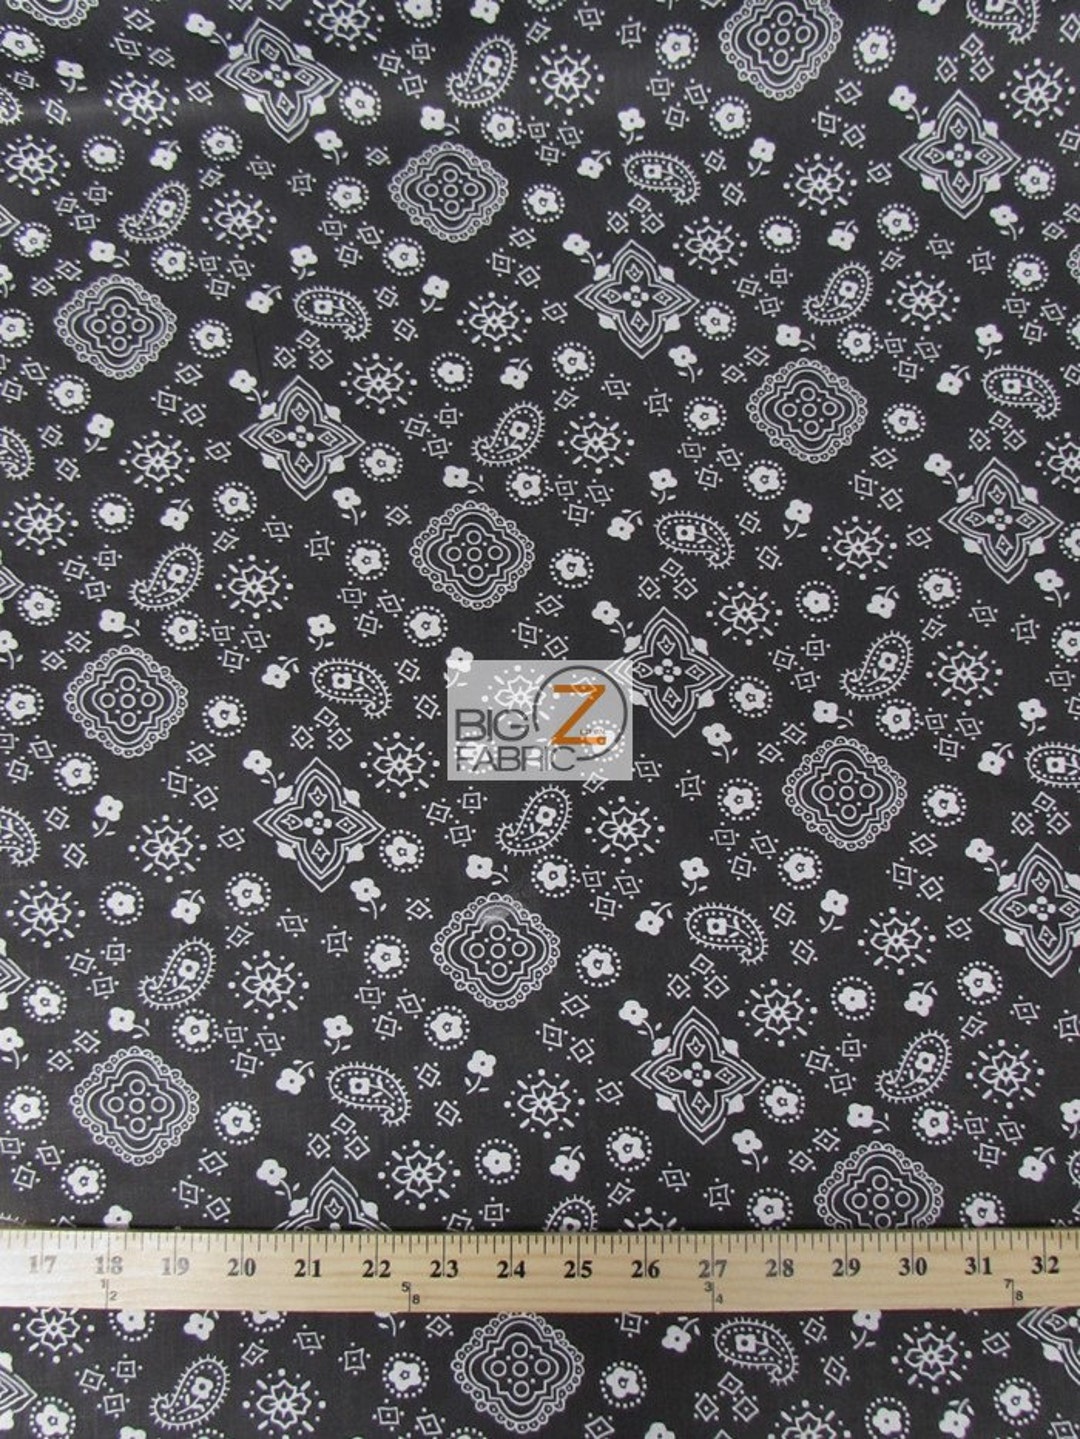 3 Yards Black Bandana Denim Fabric by the yard Printed Paisley